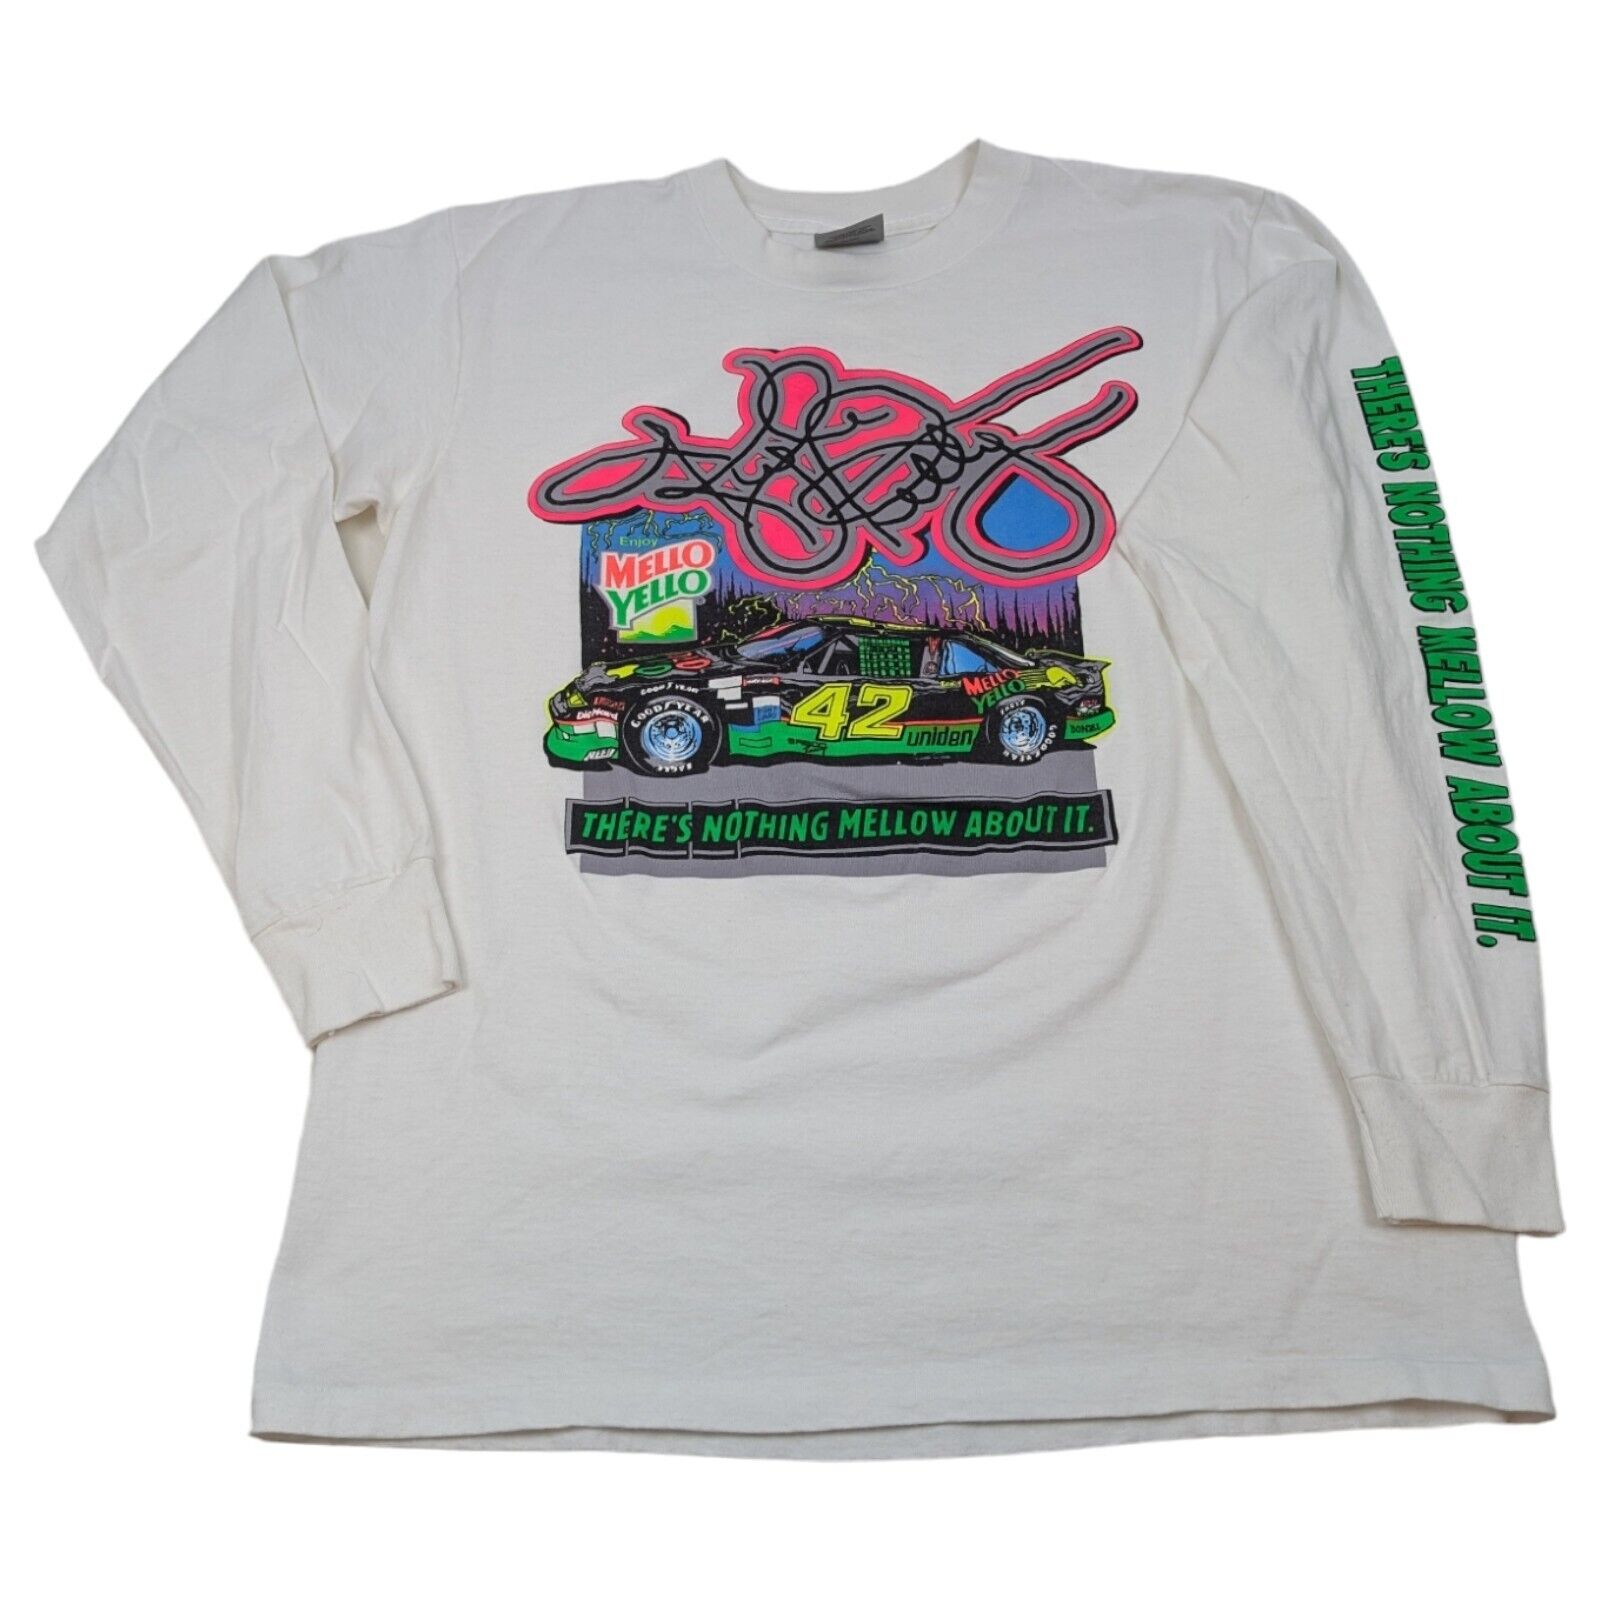 Kyle Petty Mello Yello Racing Long Sleeve T-Shirt Large VTG 90’s NASCAR